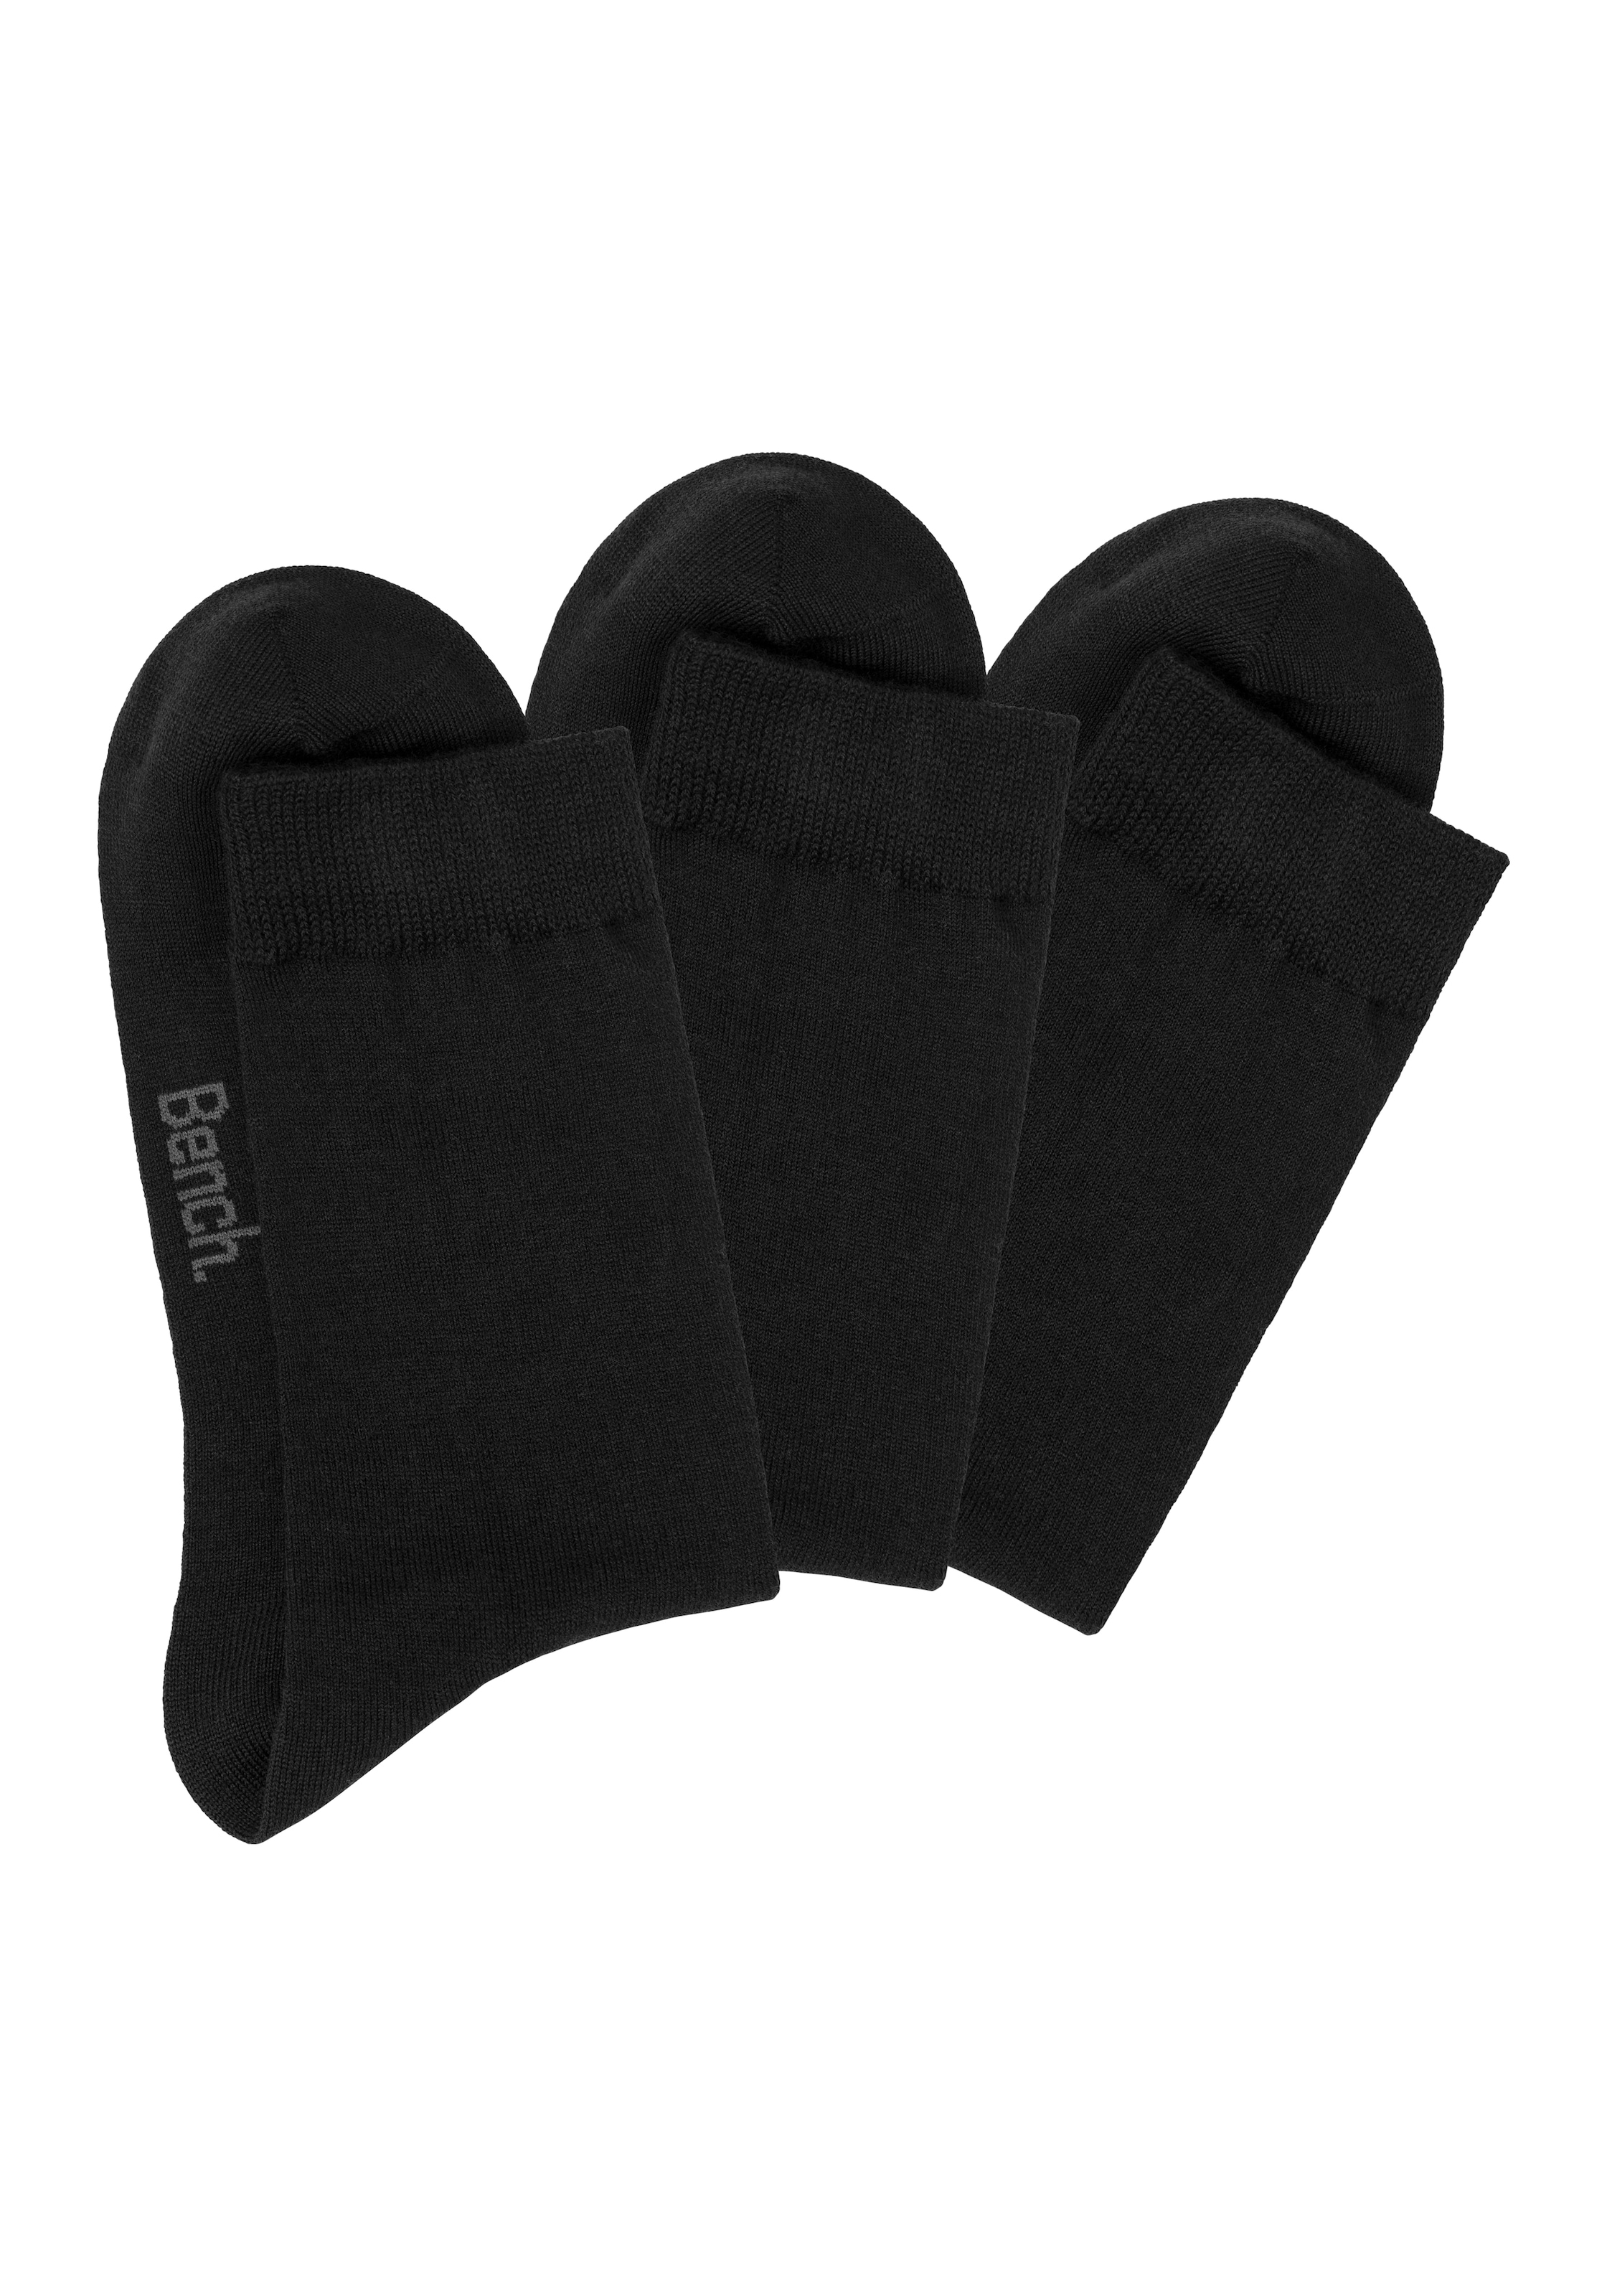 Bench. Socken, (Packung, 3 Paar), Wollsocken aus flauschigem Material mit 53% Wolle